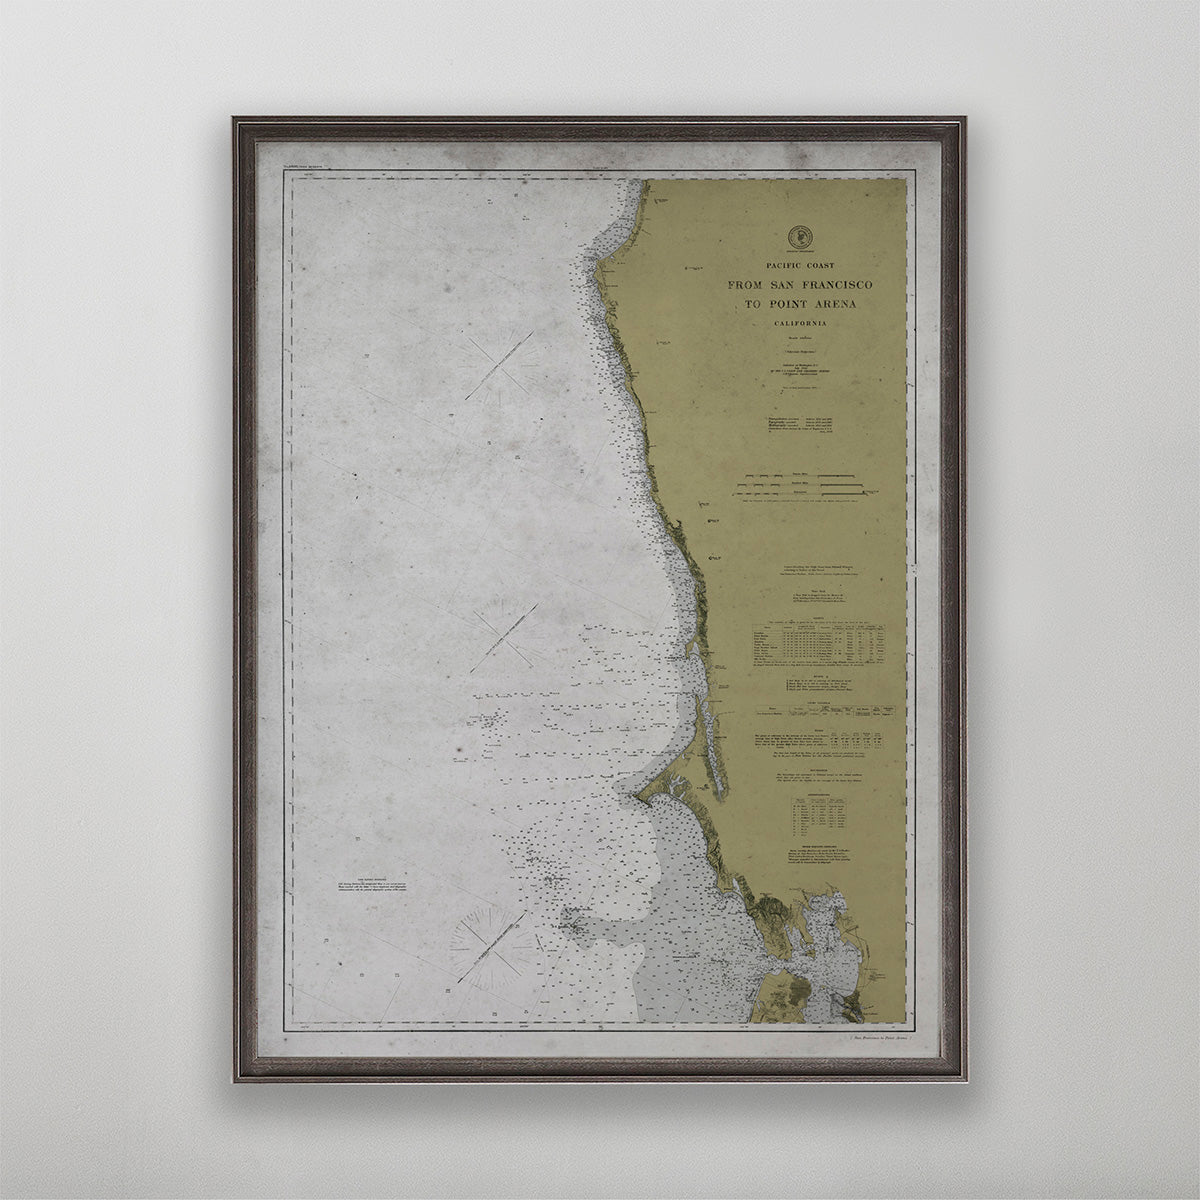 Old vintage historic nautical chart of Santa Monica Bay, California wall art home decor. 